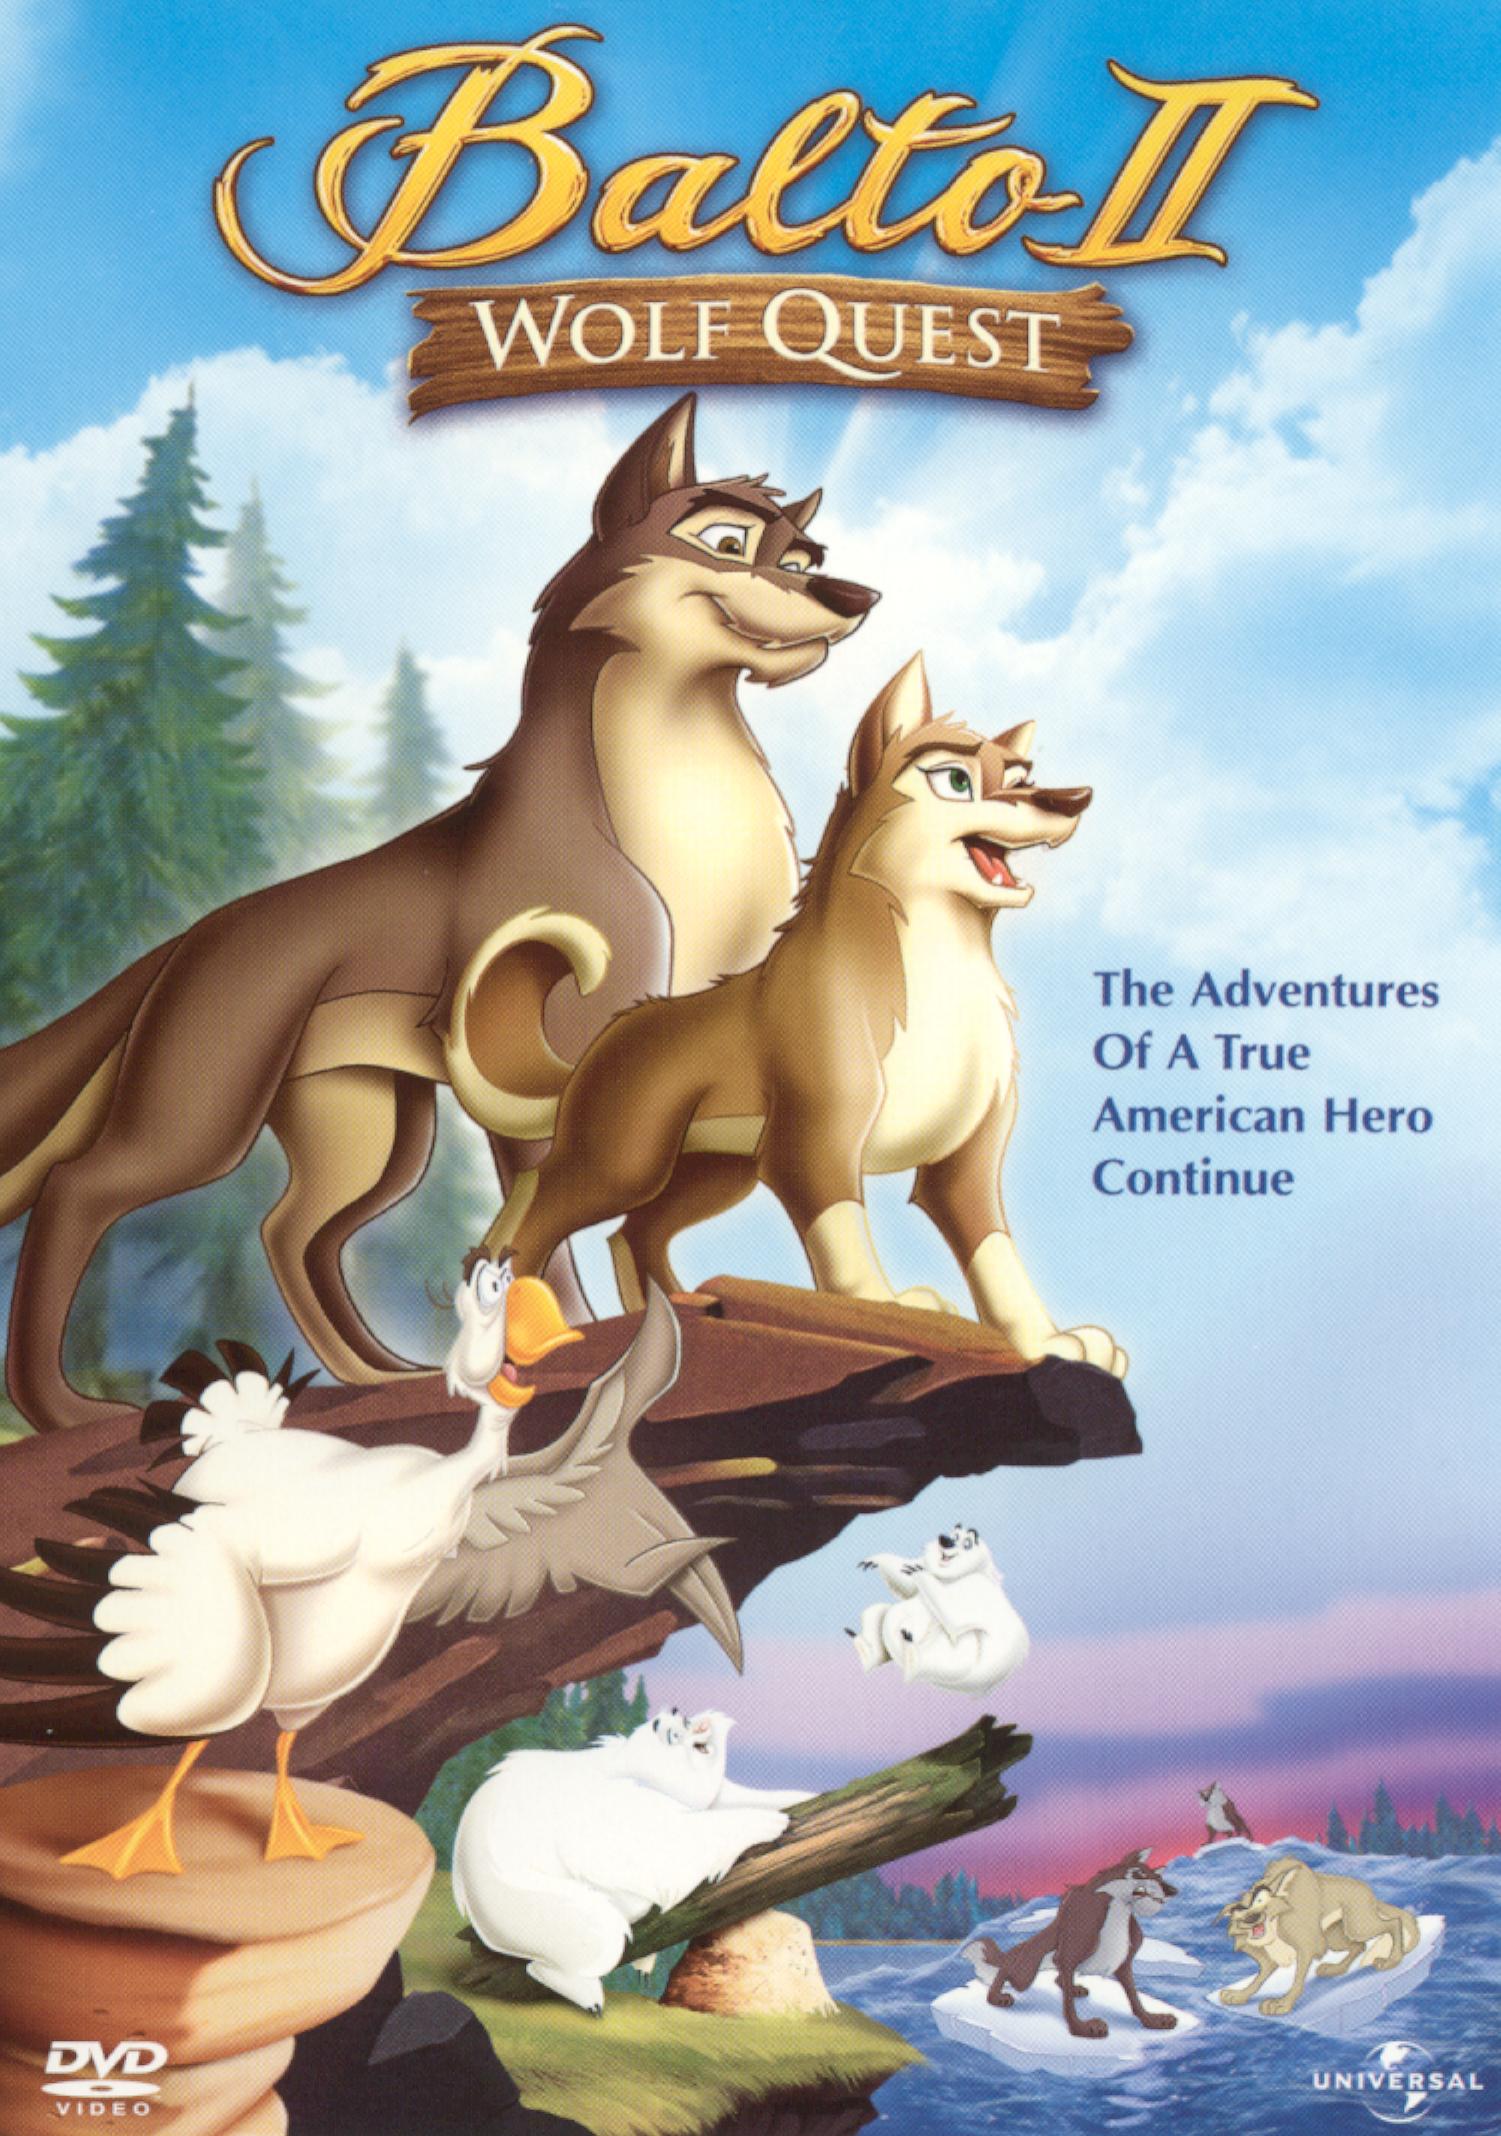 Balto 2: Wolf Quest cover art